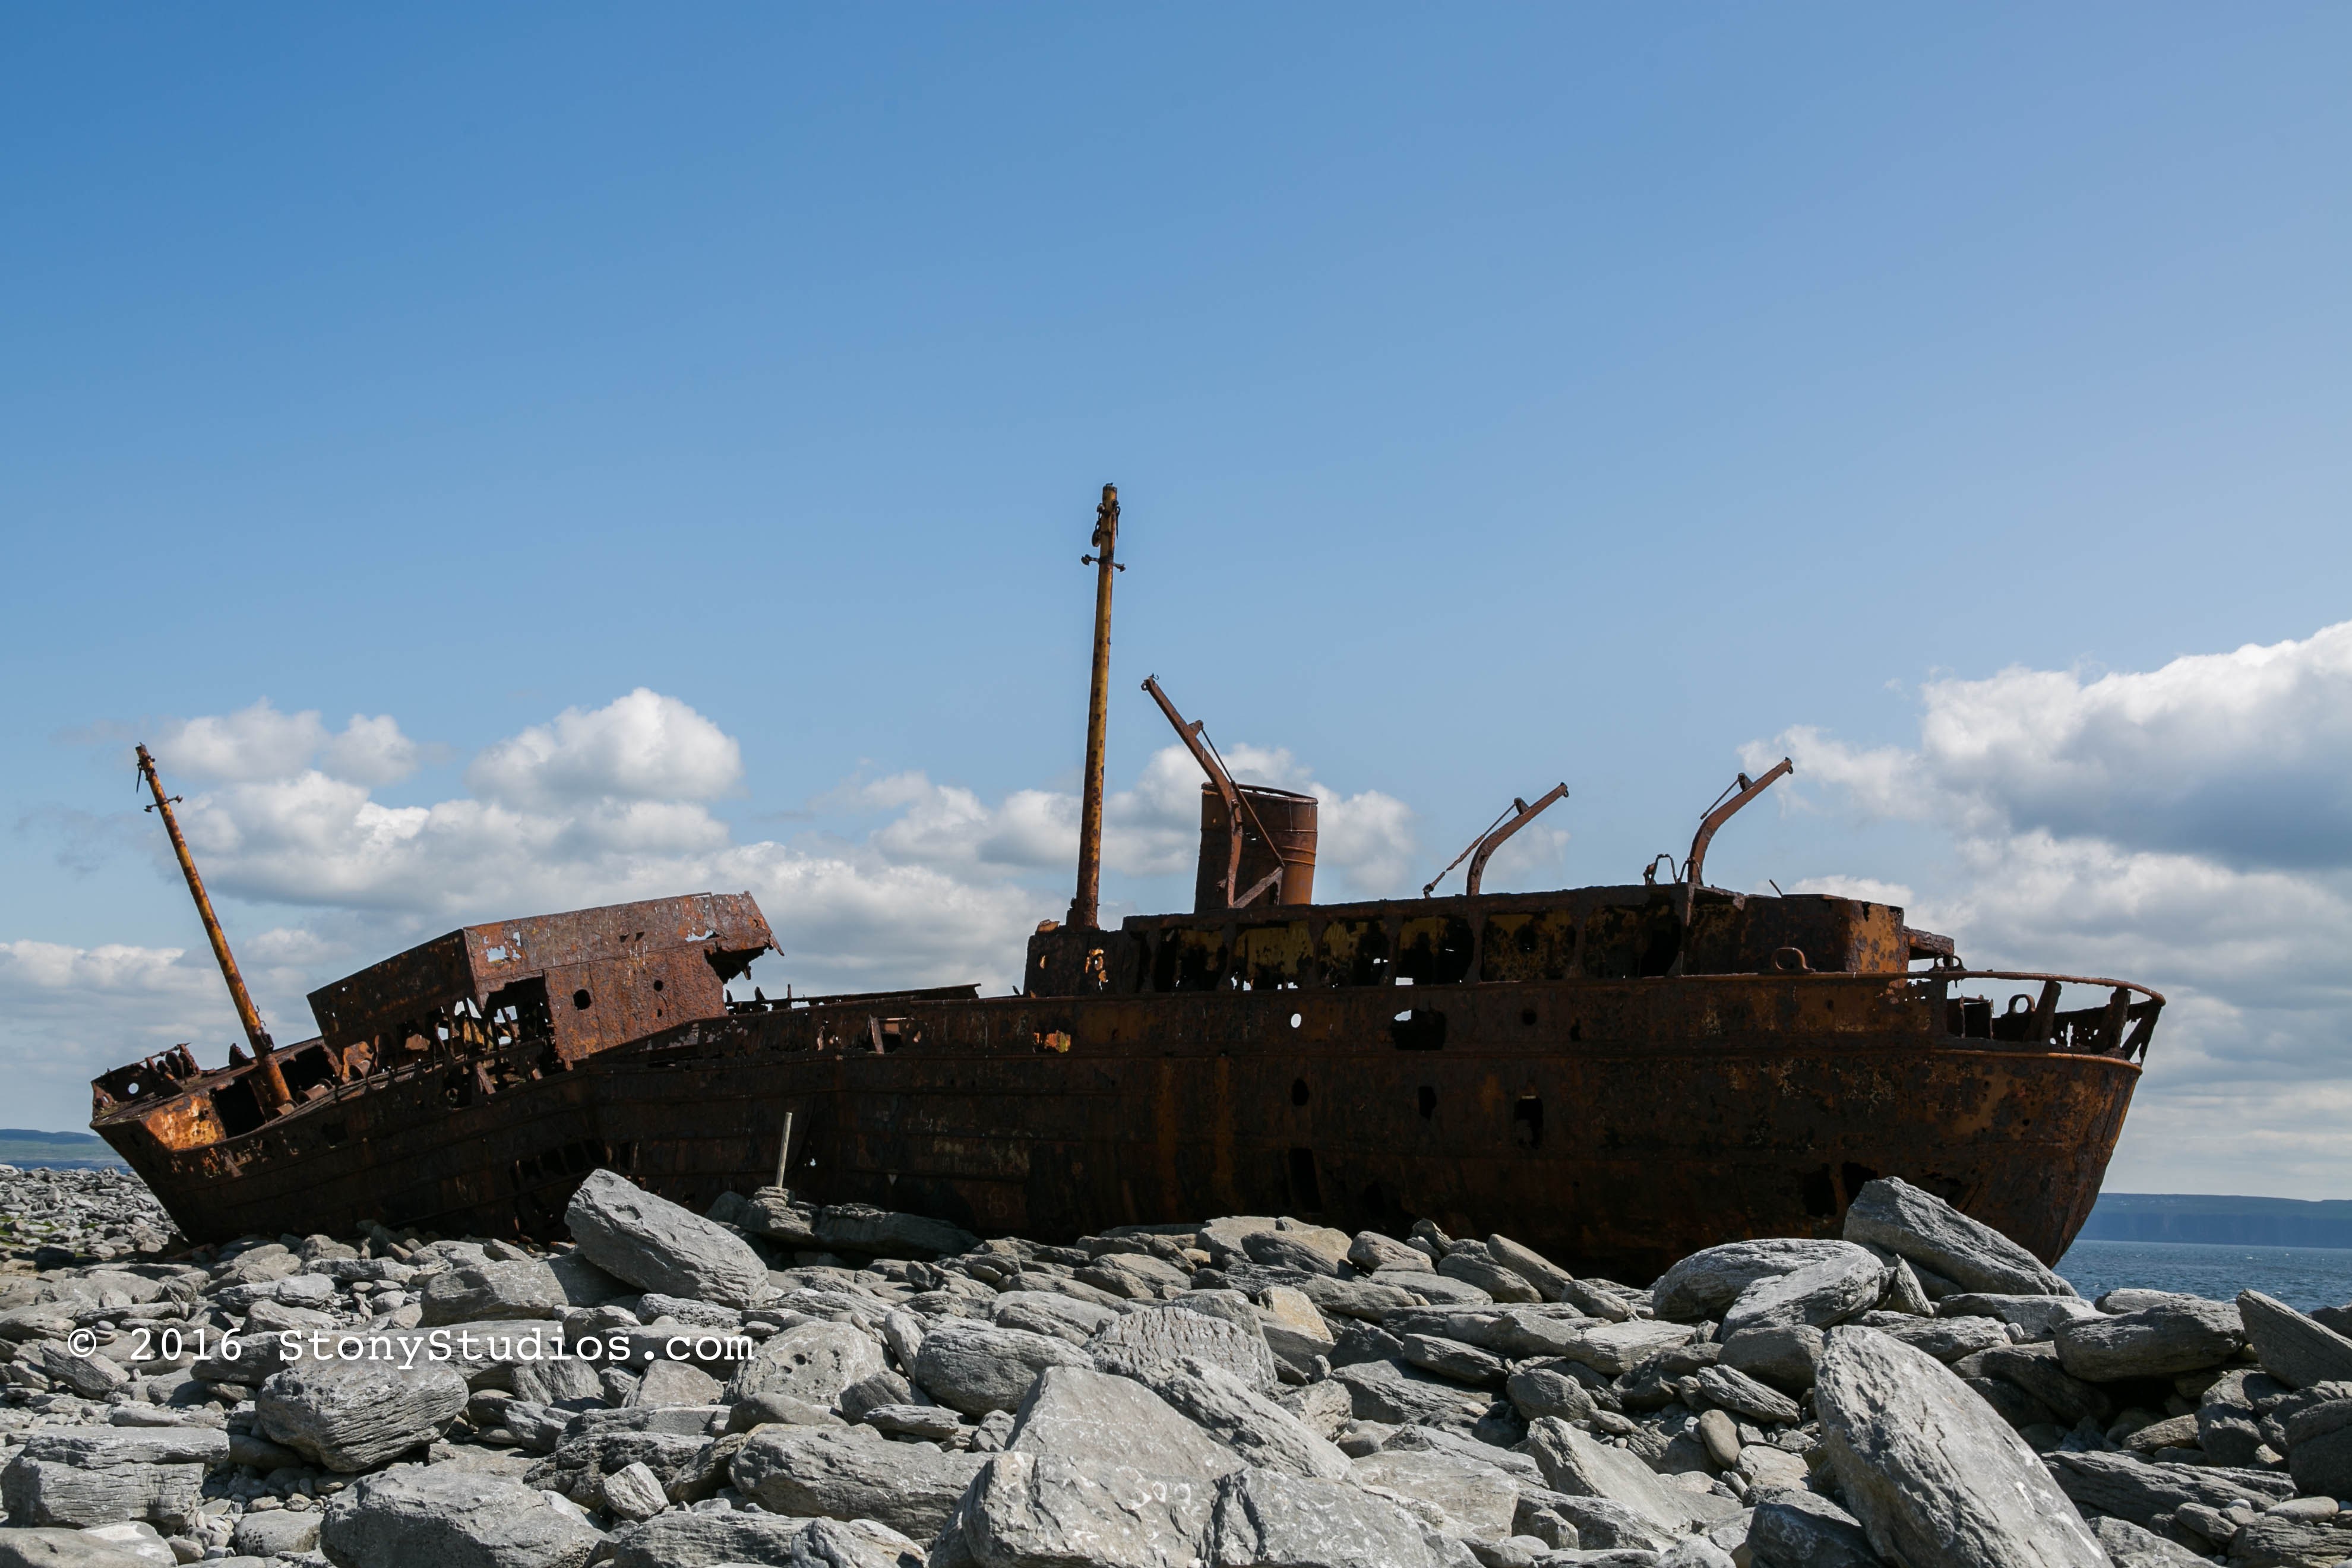 Stony Studios » The Plassey Shipwreck, Inis Oírr